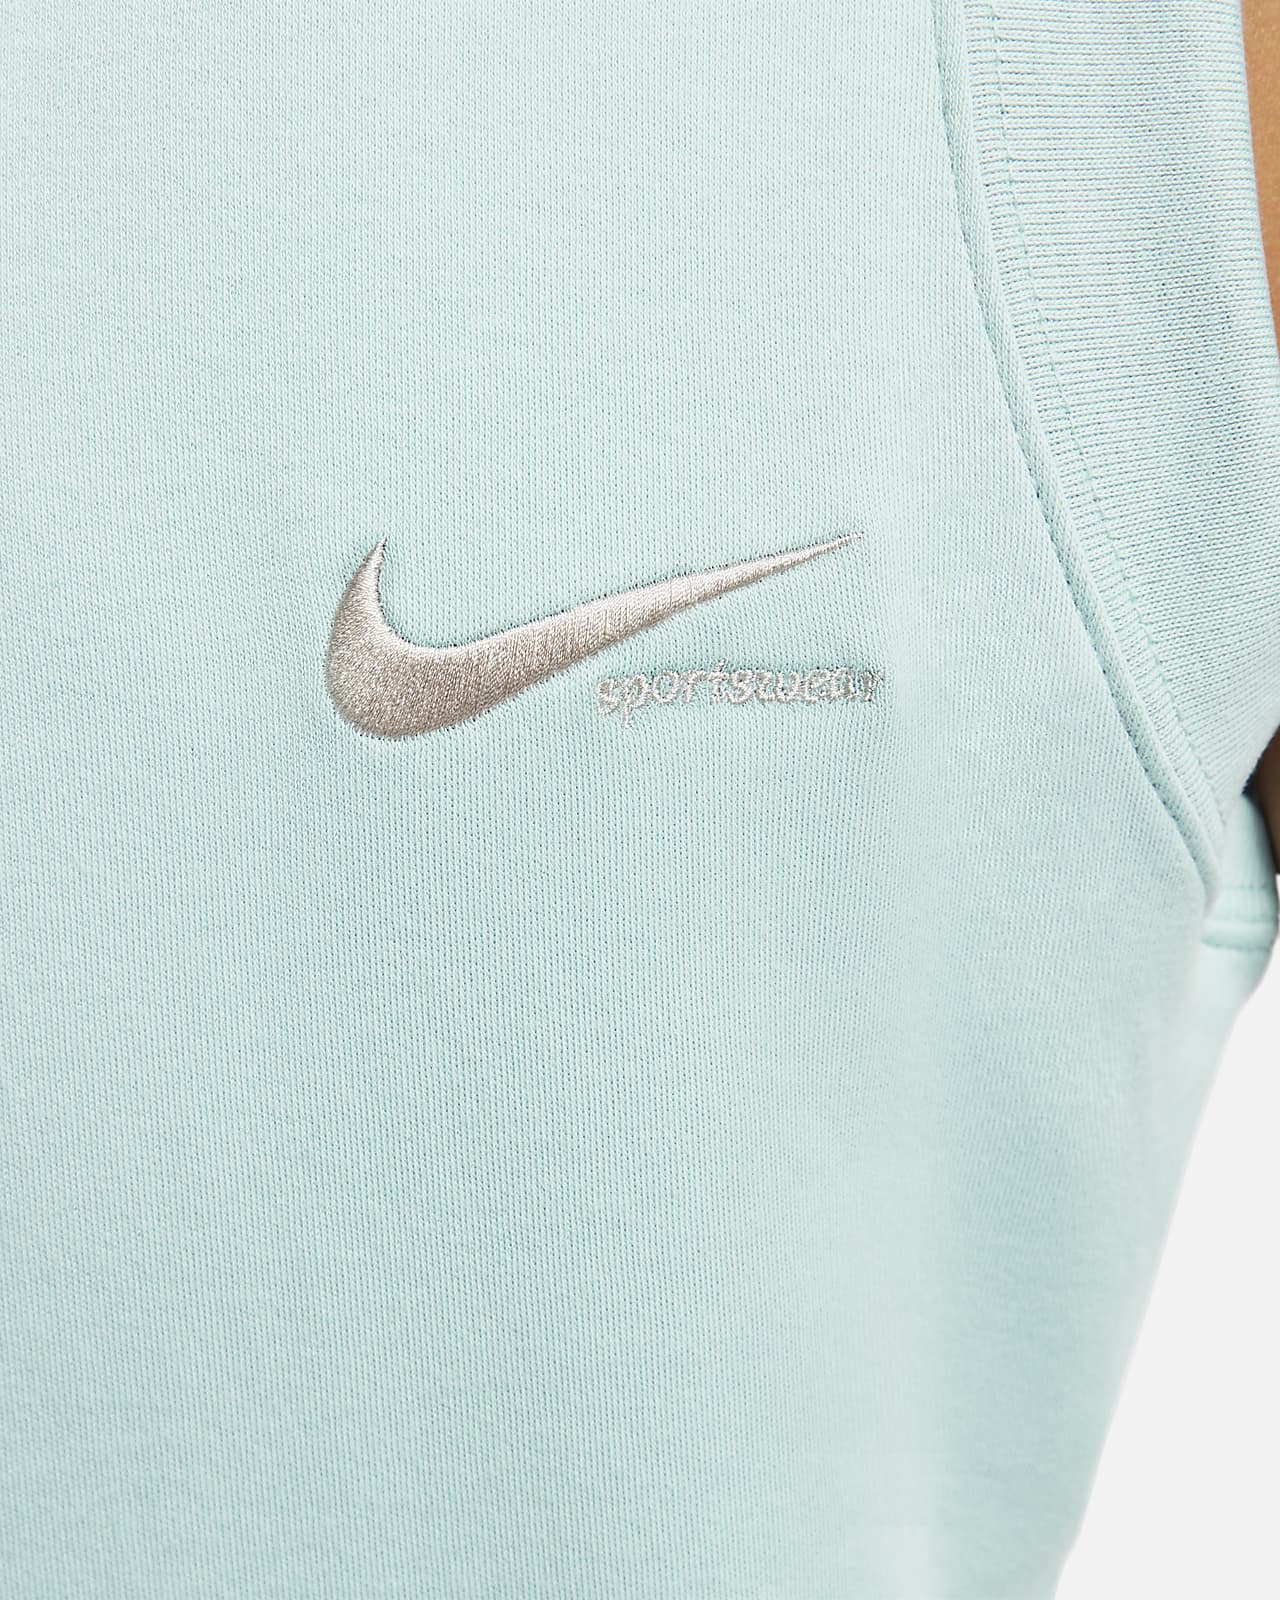 Mini-logo cropped mock-neck top, Nike, Running Tops